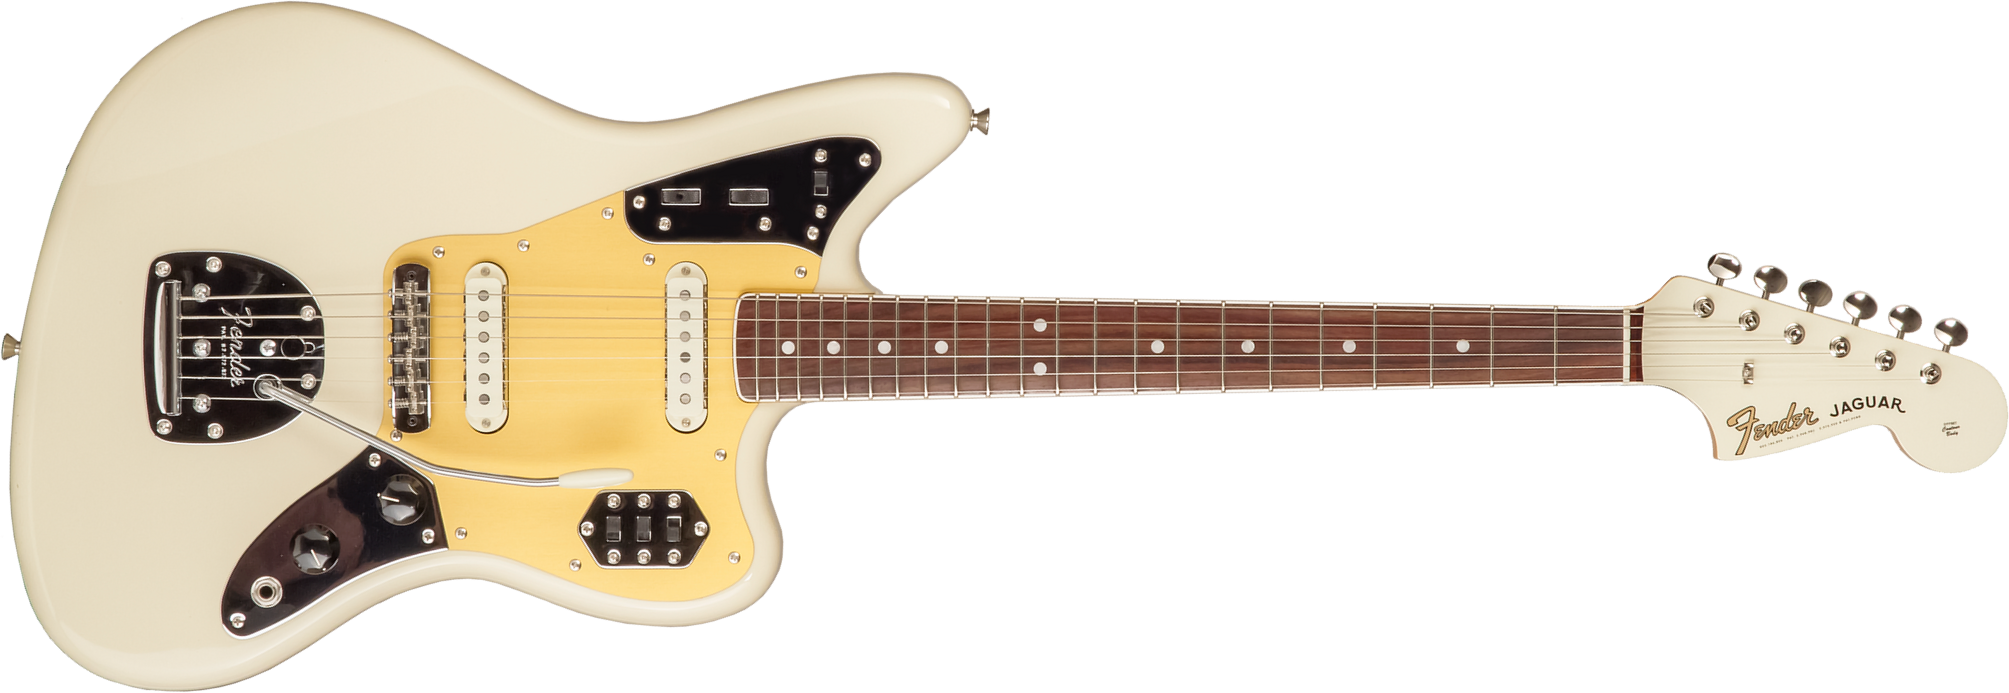 Fender Jaguar Traditional Ii 60s Japan 2s Trem Rw - Olympic White - Retro rock electric guitar - Main picture